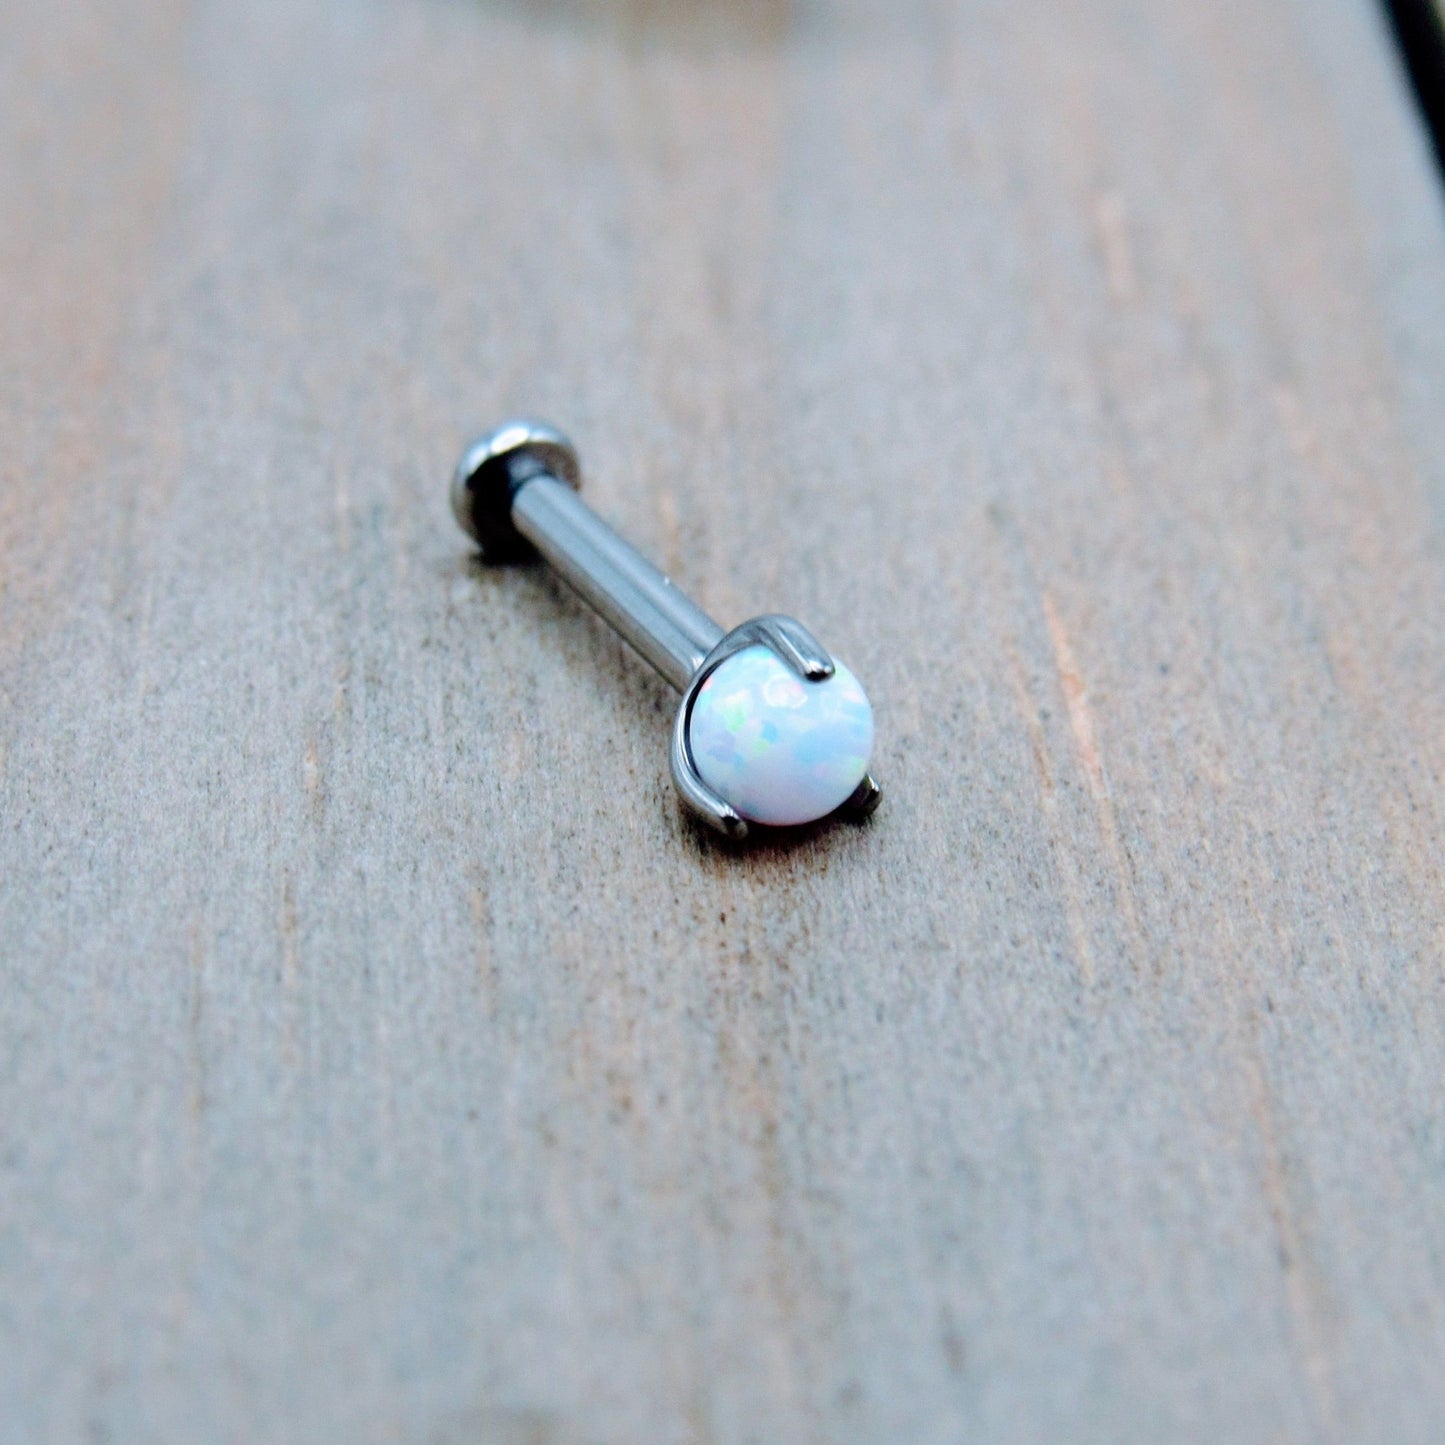 16g White opal titanium flat back earring stud helix lip cartilage tragus body piercing jewelry earring - Siren Body Jewelry